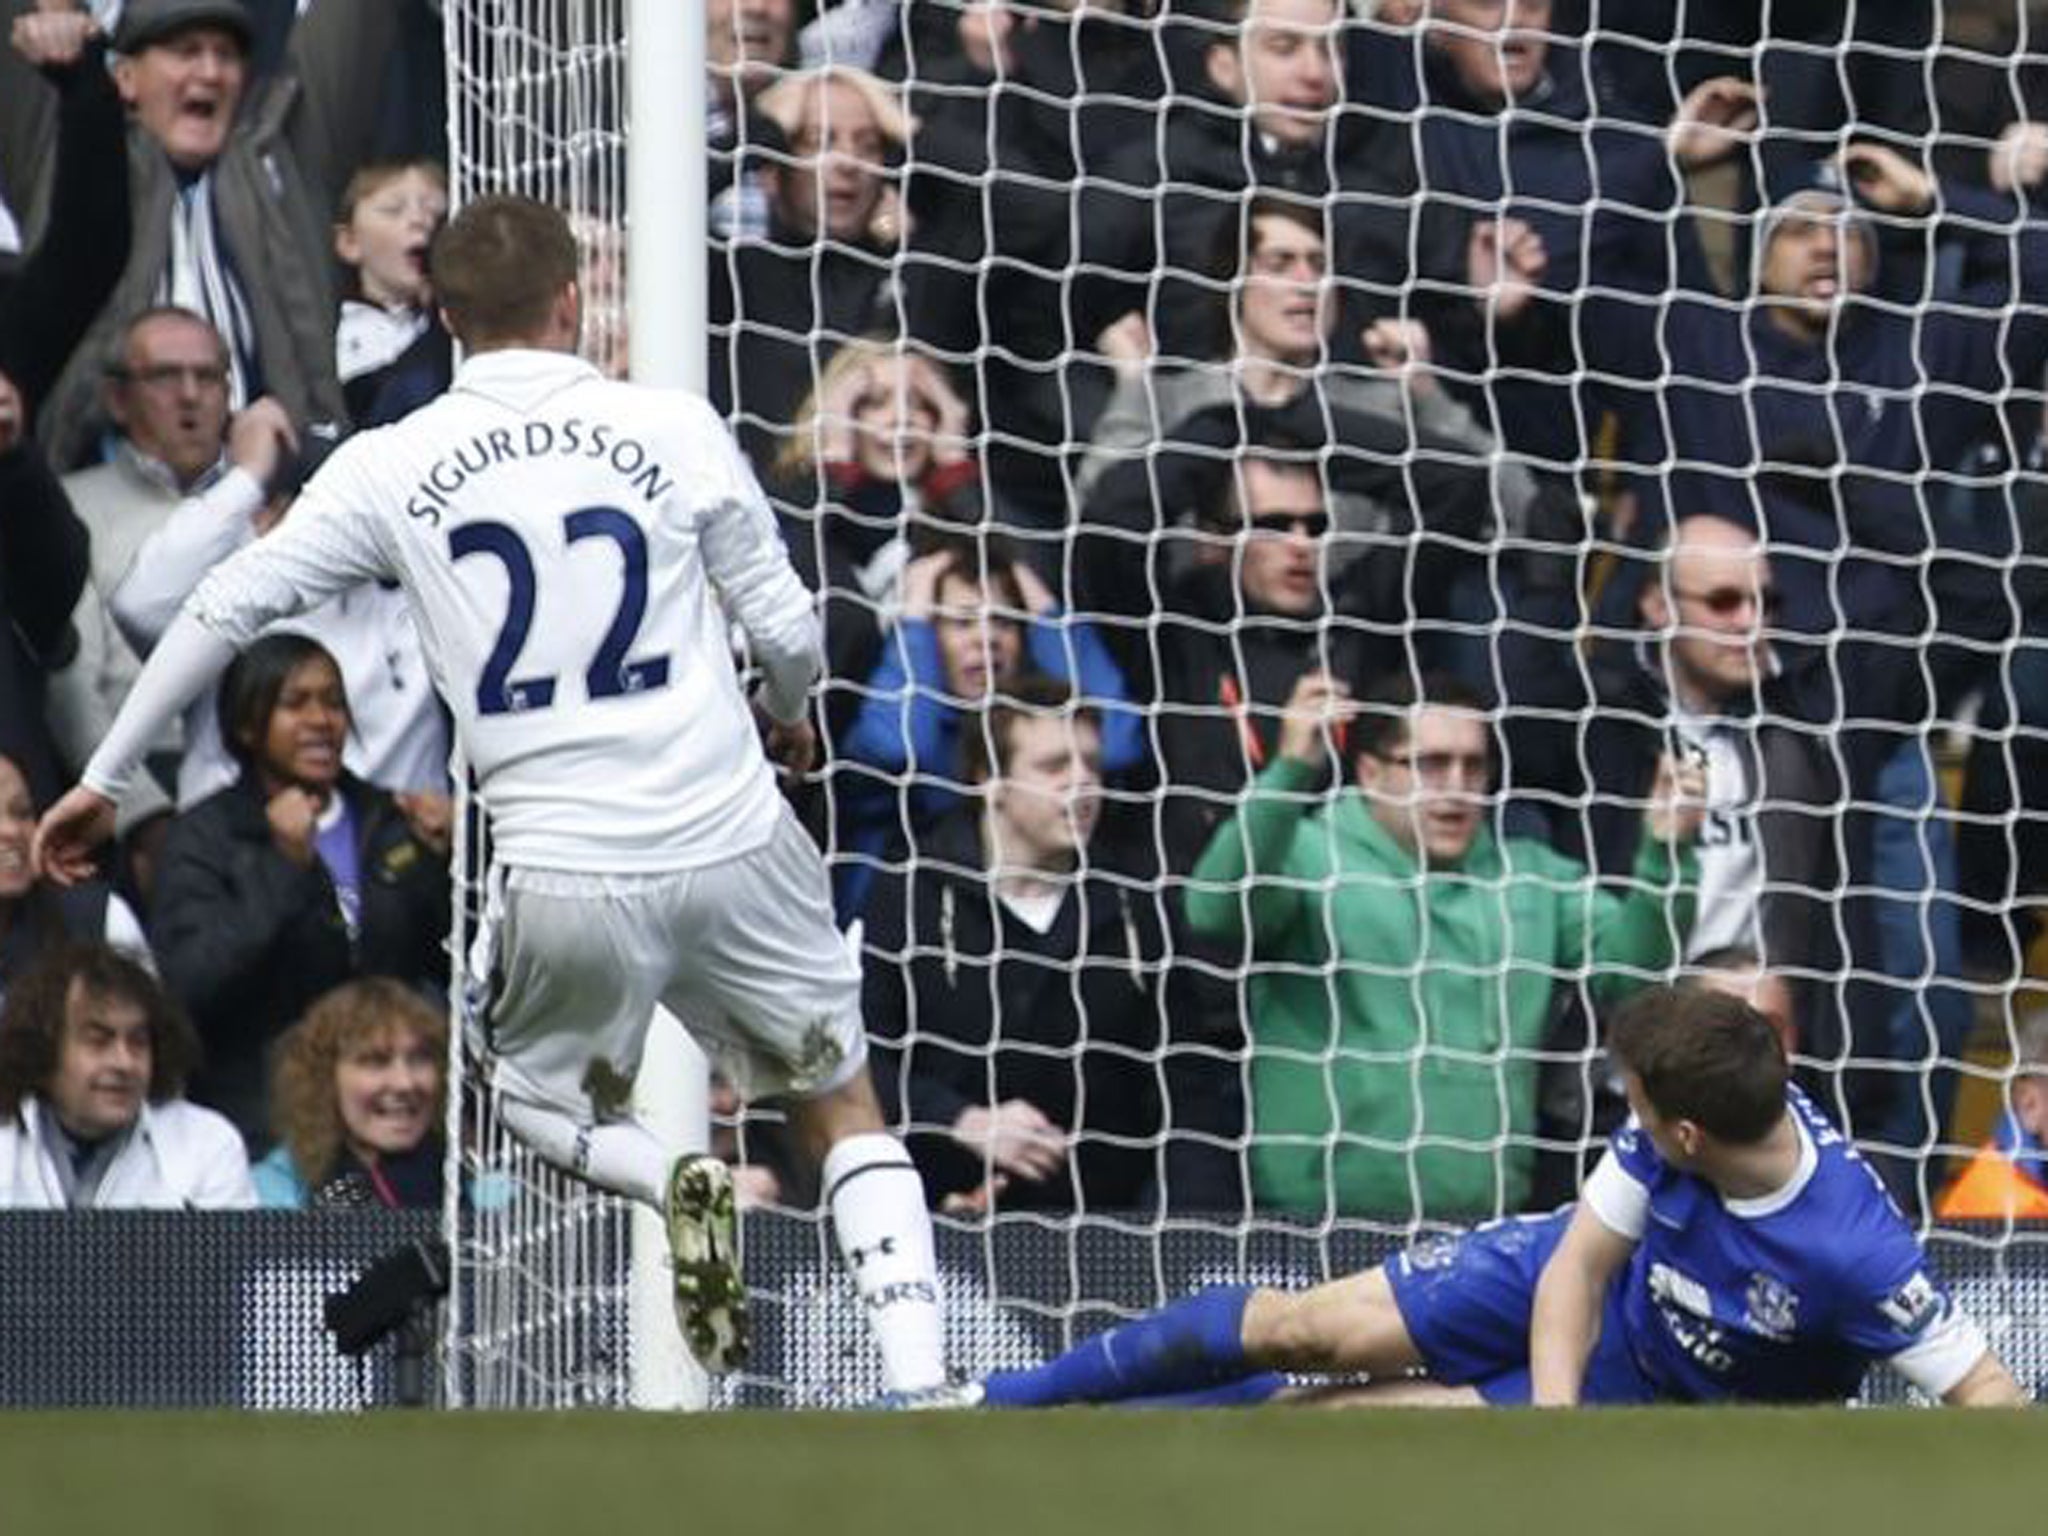 Tottenham Hotspur's Gylfi Sigurdsson scores against Everton